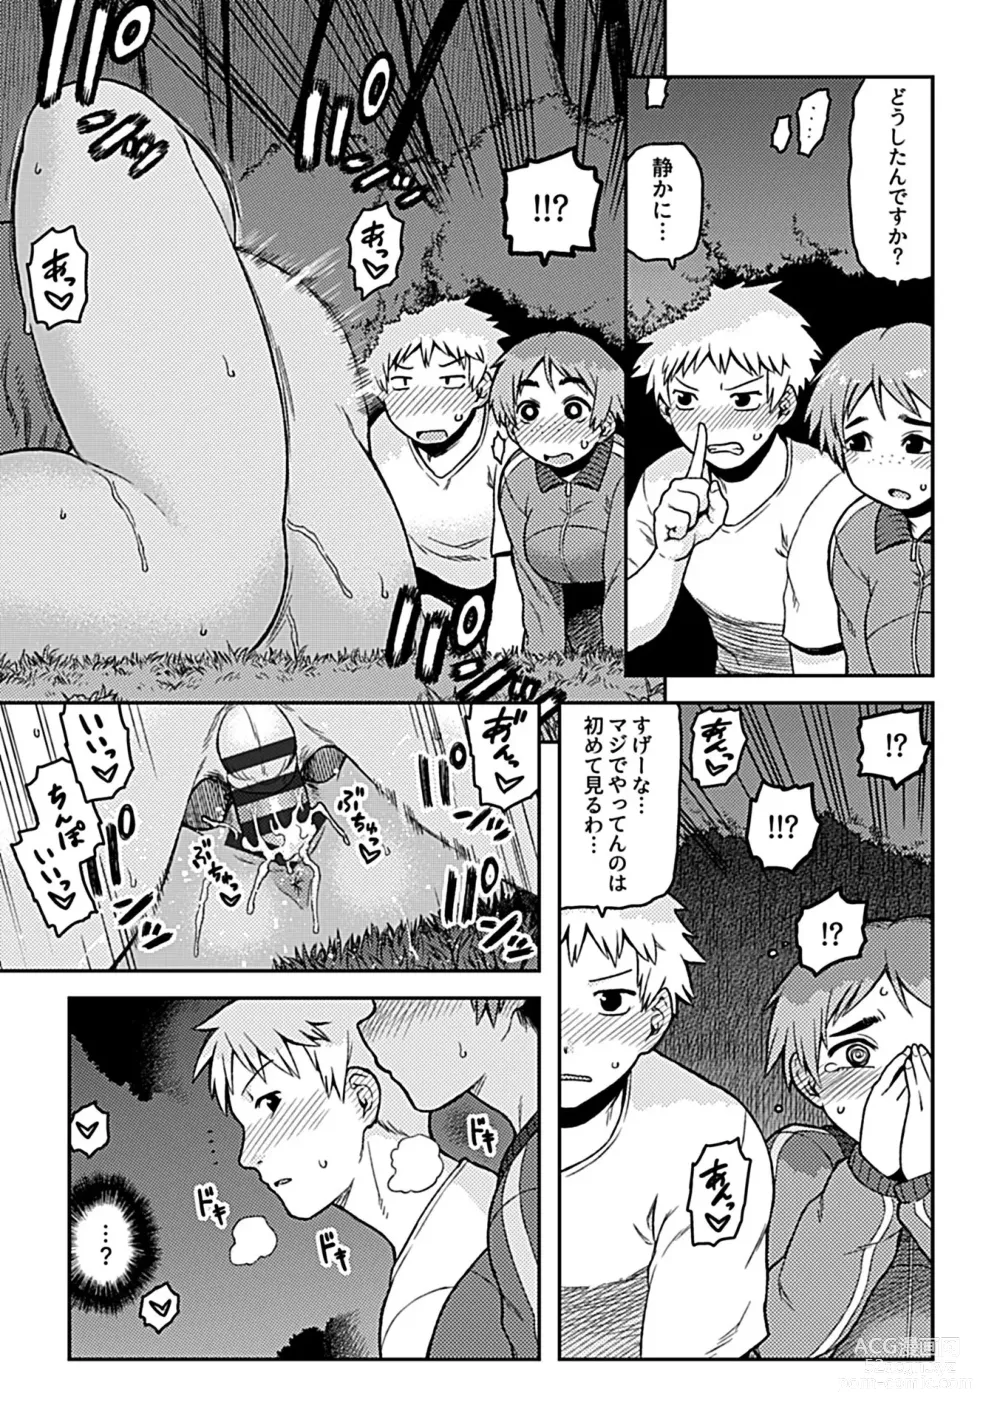 Page 11 of manga Aibiki